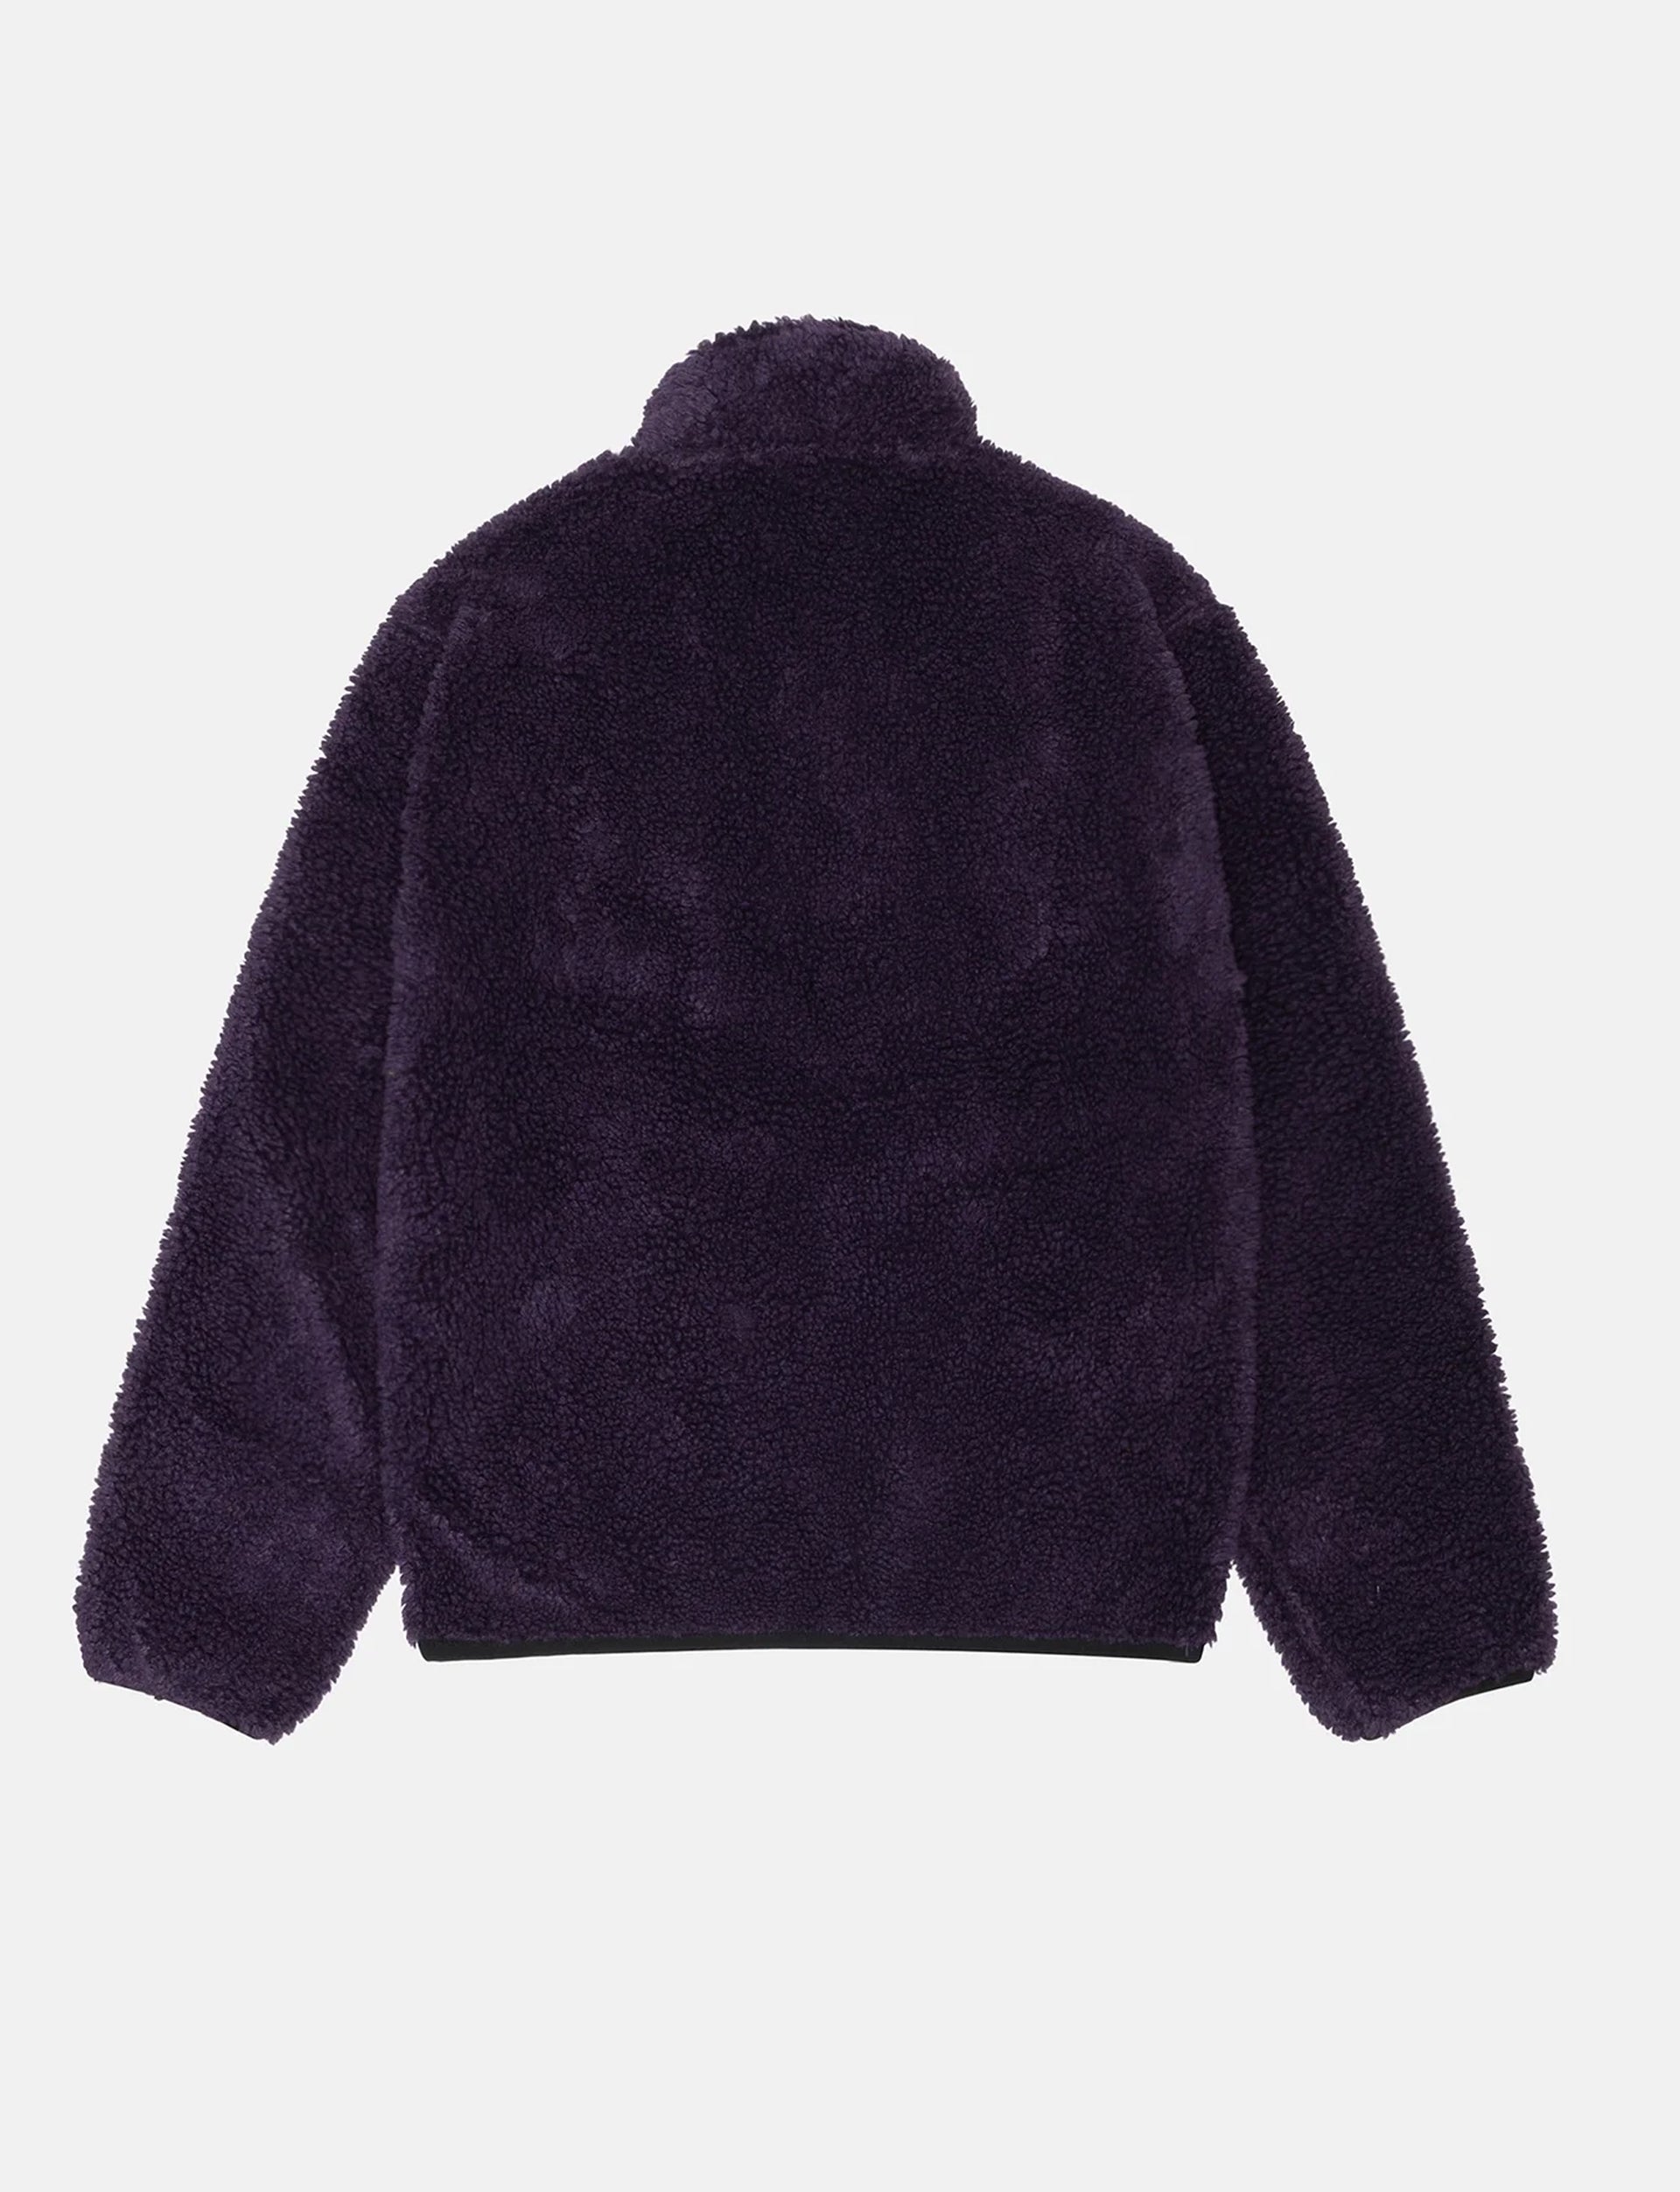 STÜSSY Sherpa Reversible Jacket purple